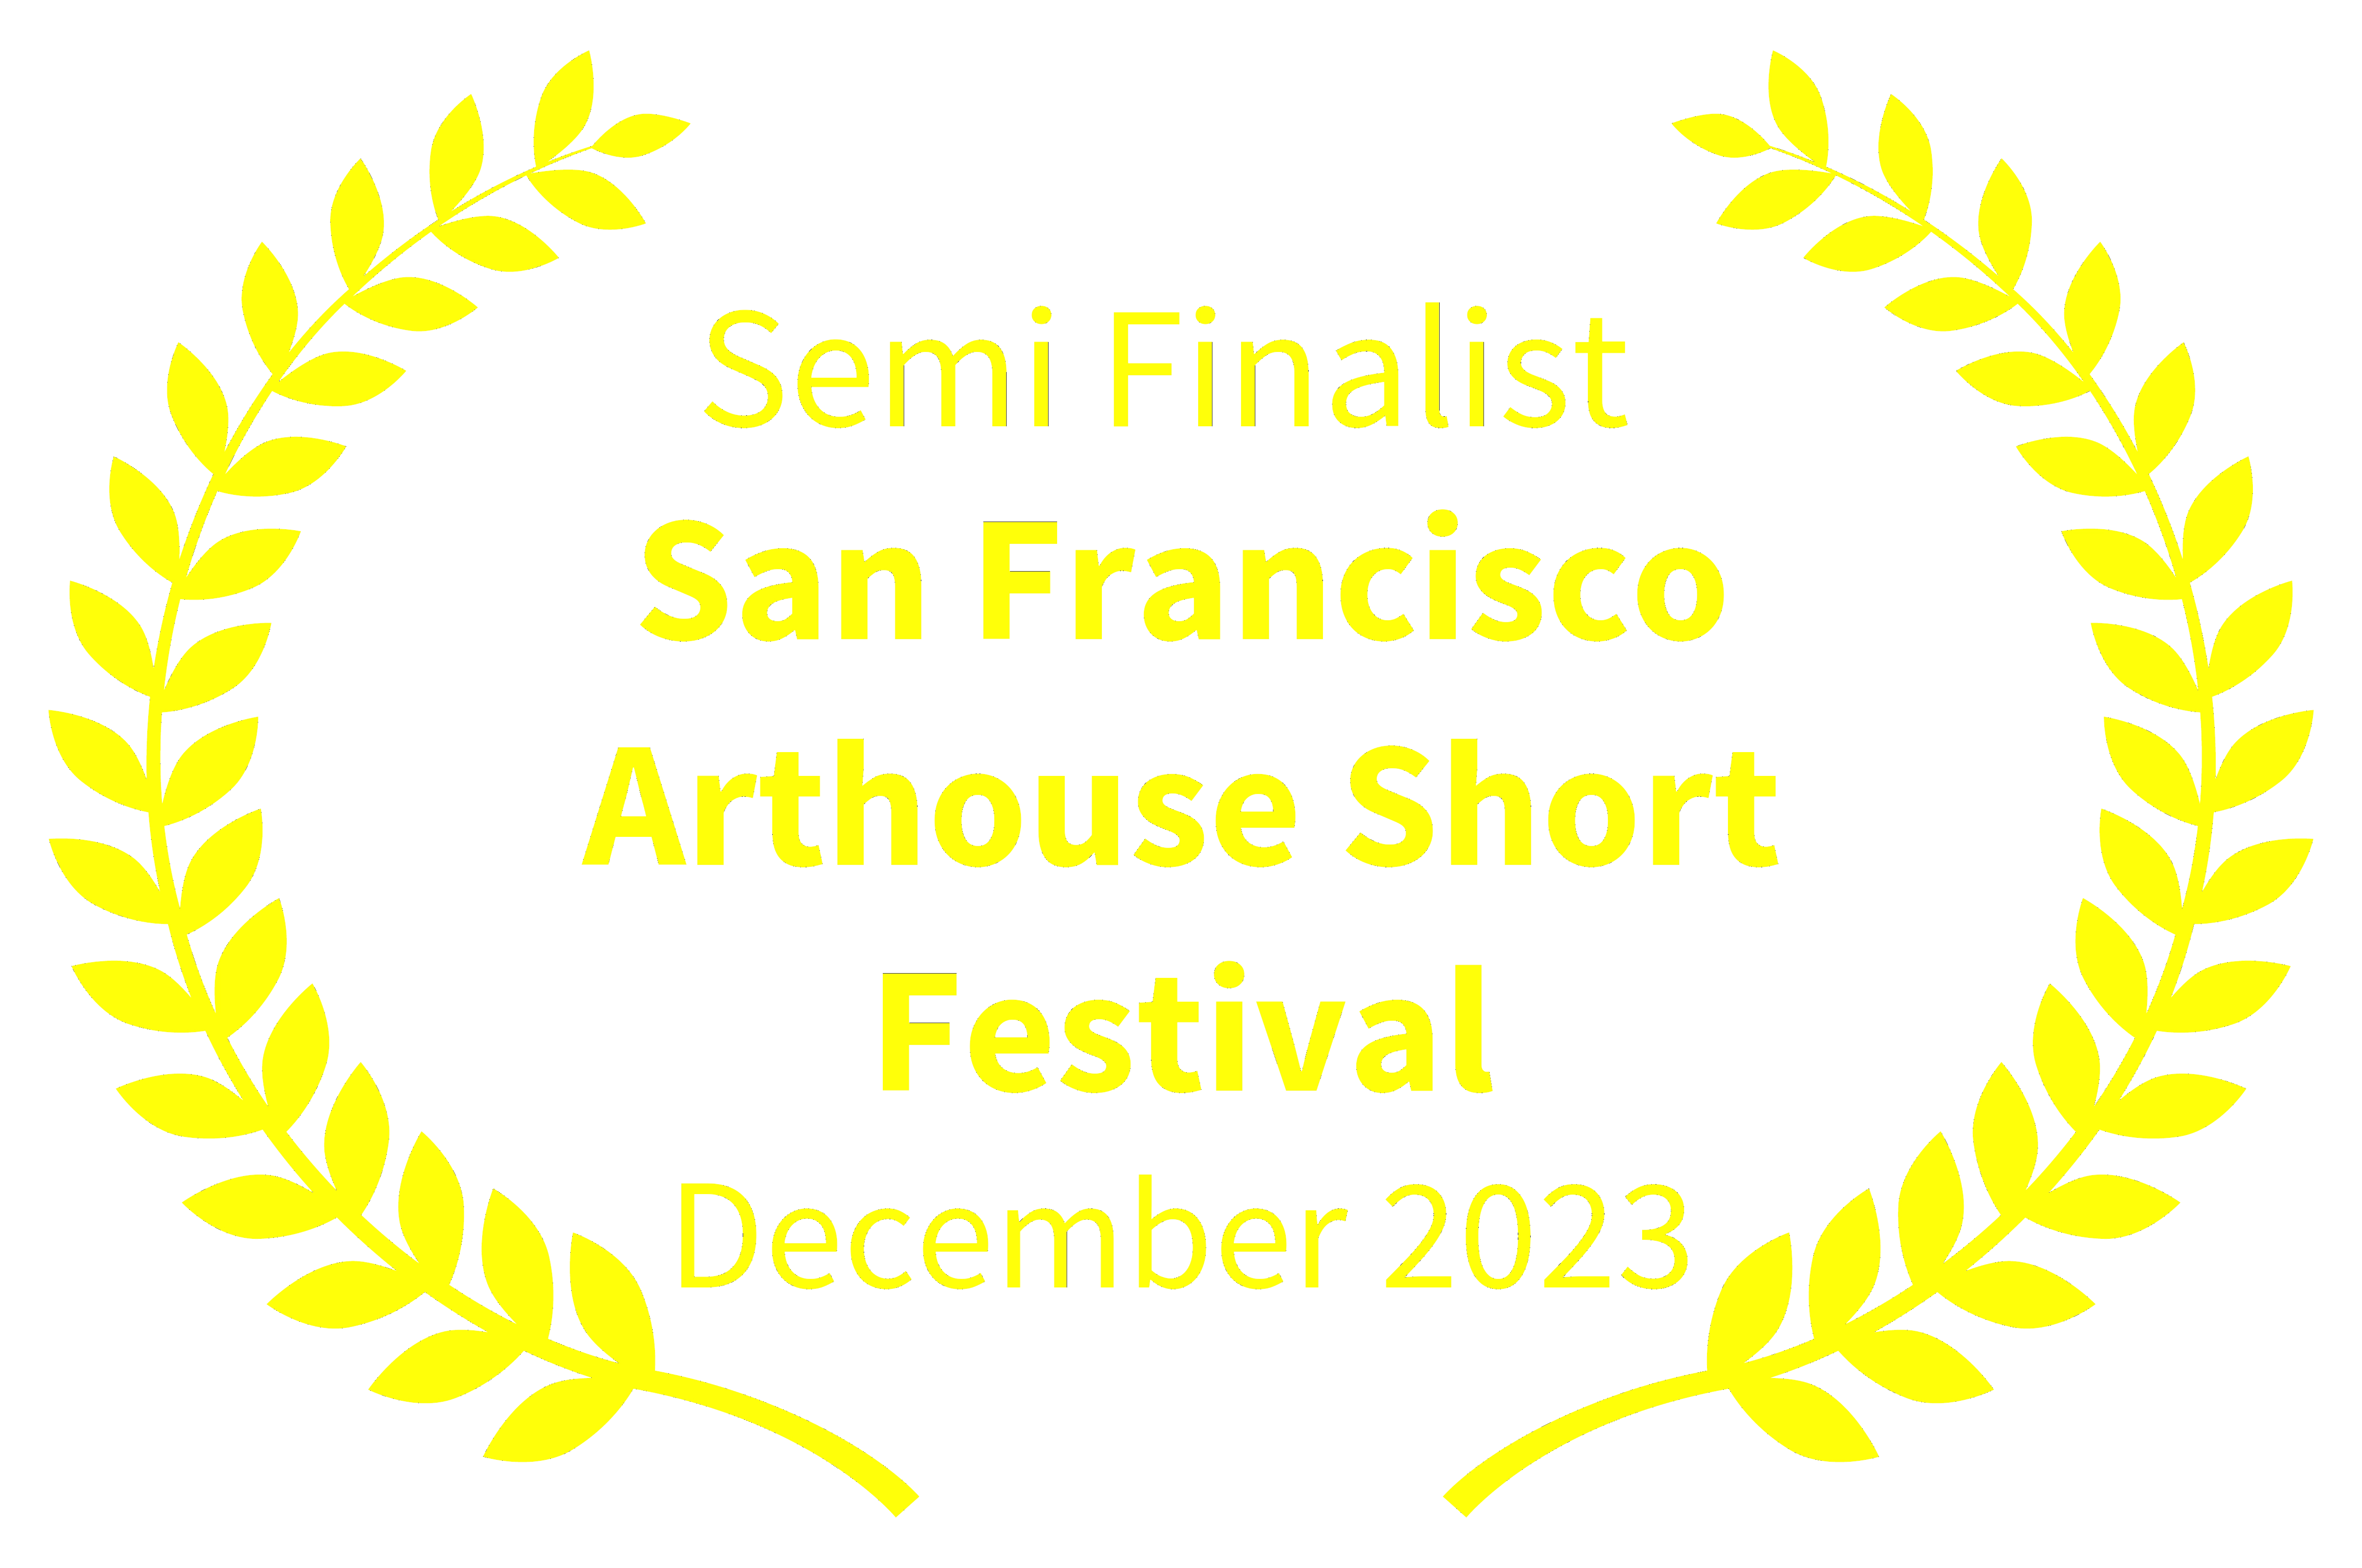 San Francisco Arthouse Short Festival